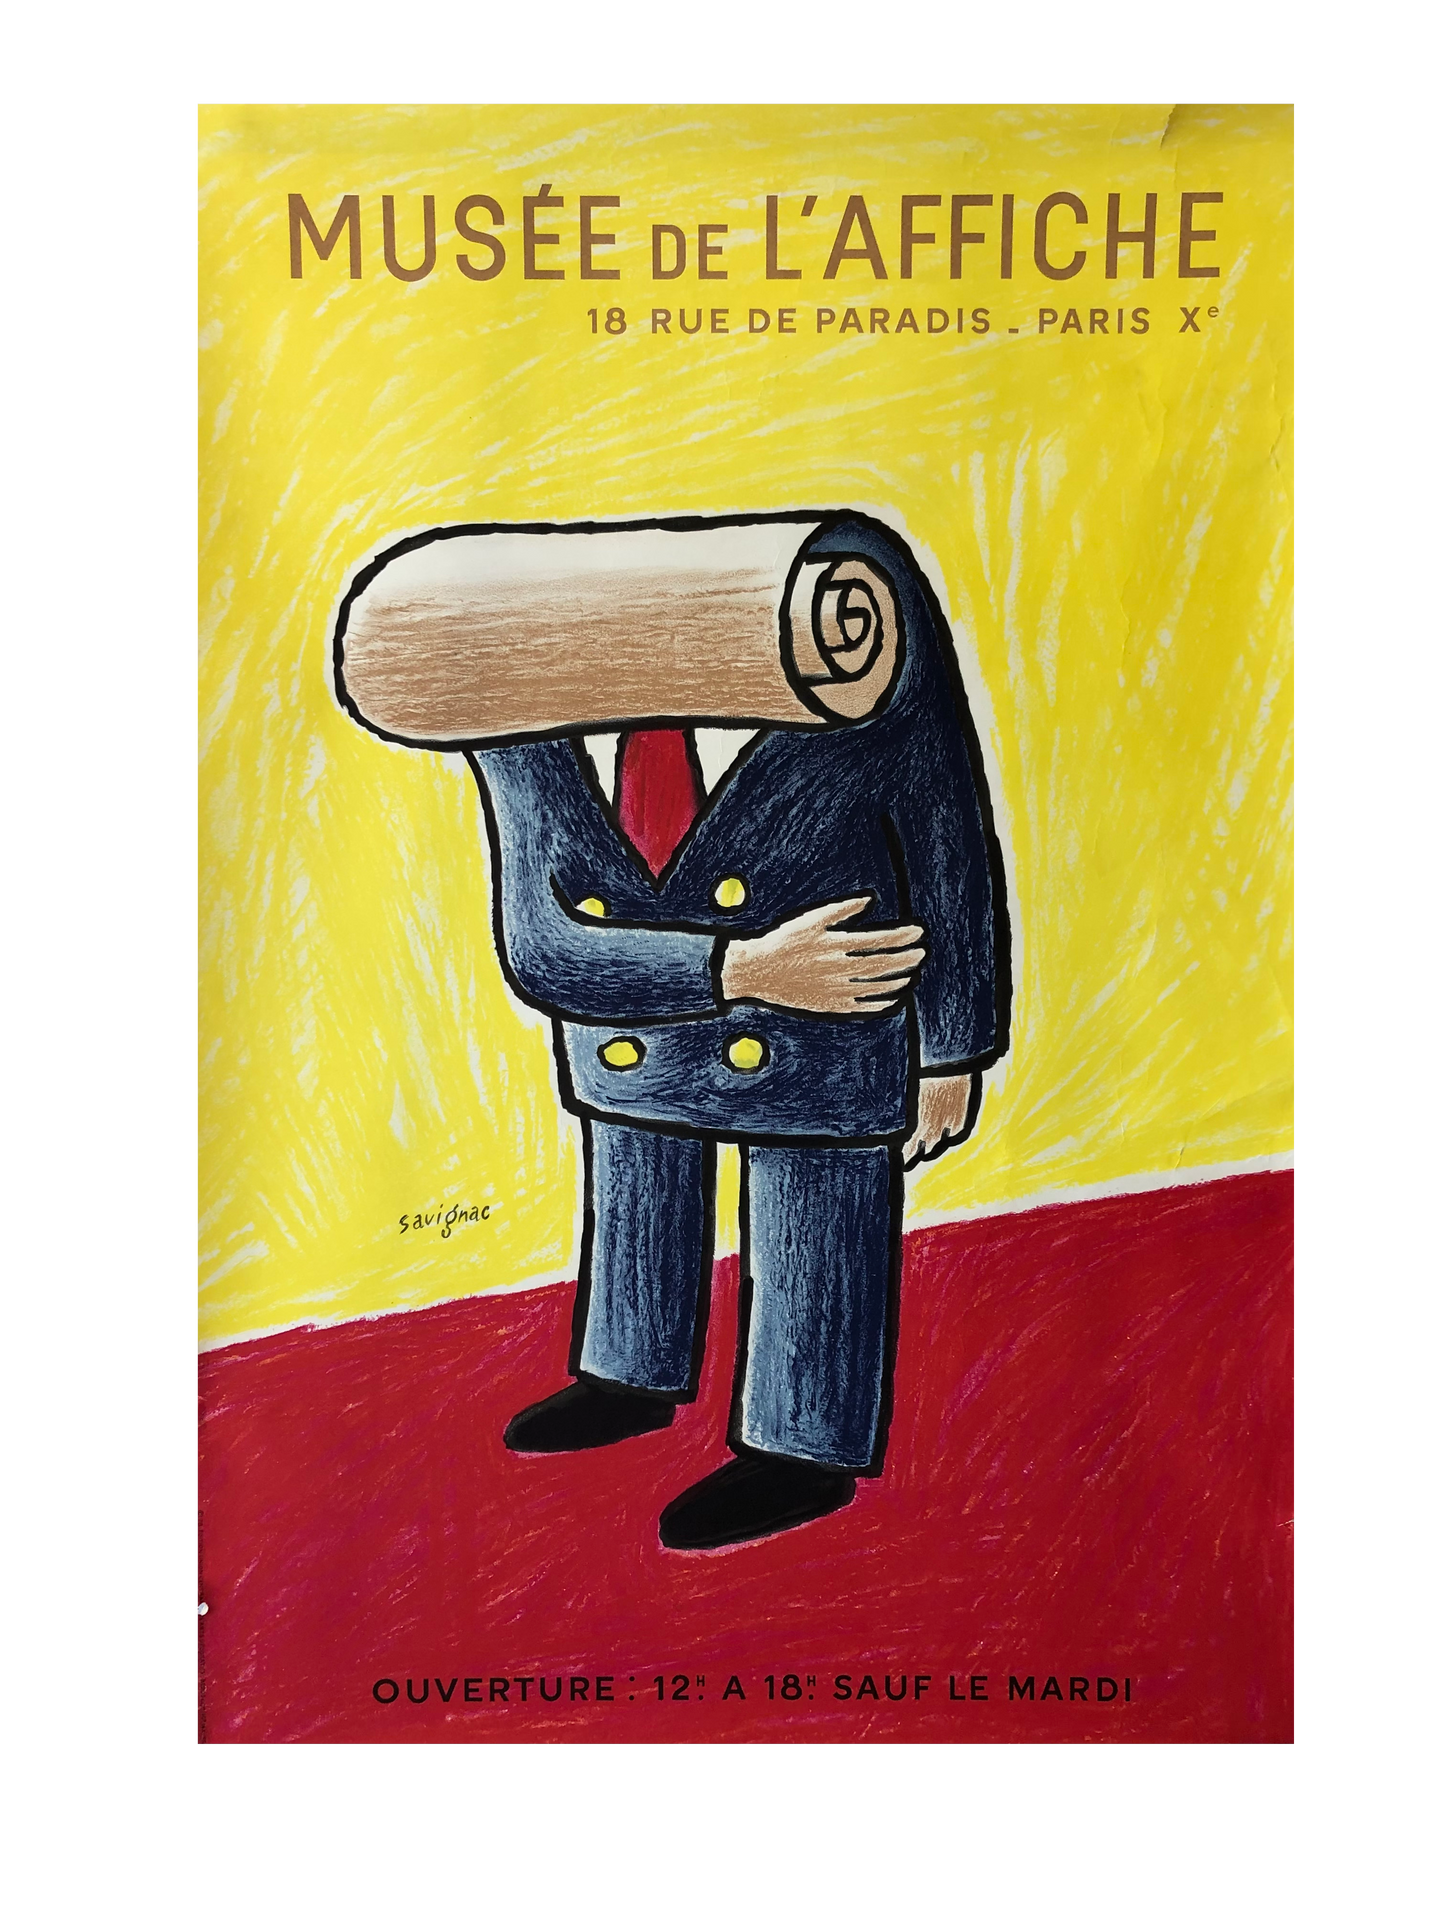 Musee de L'Affiche by Raymond Savignac